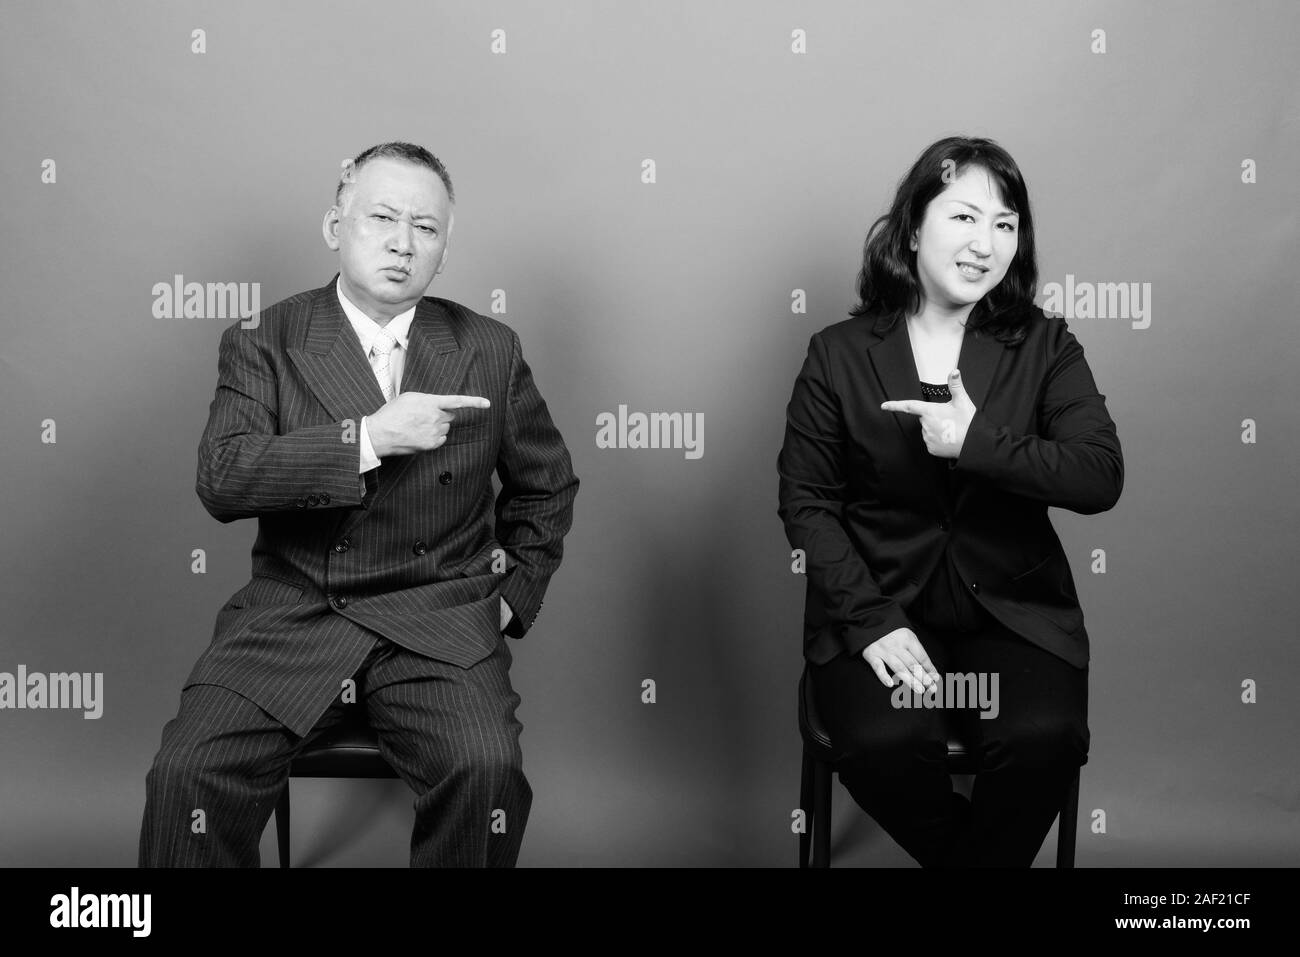 Mature Asian businessman and mature Asian businesswoman together Stock Photo